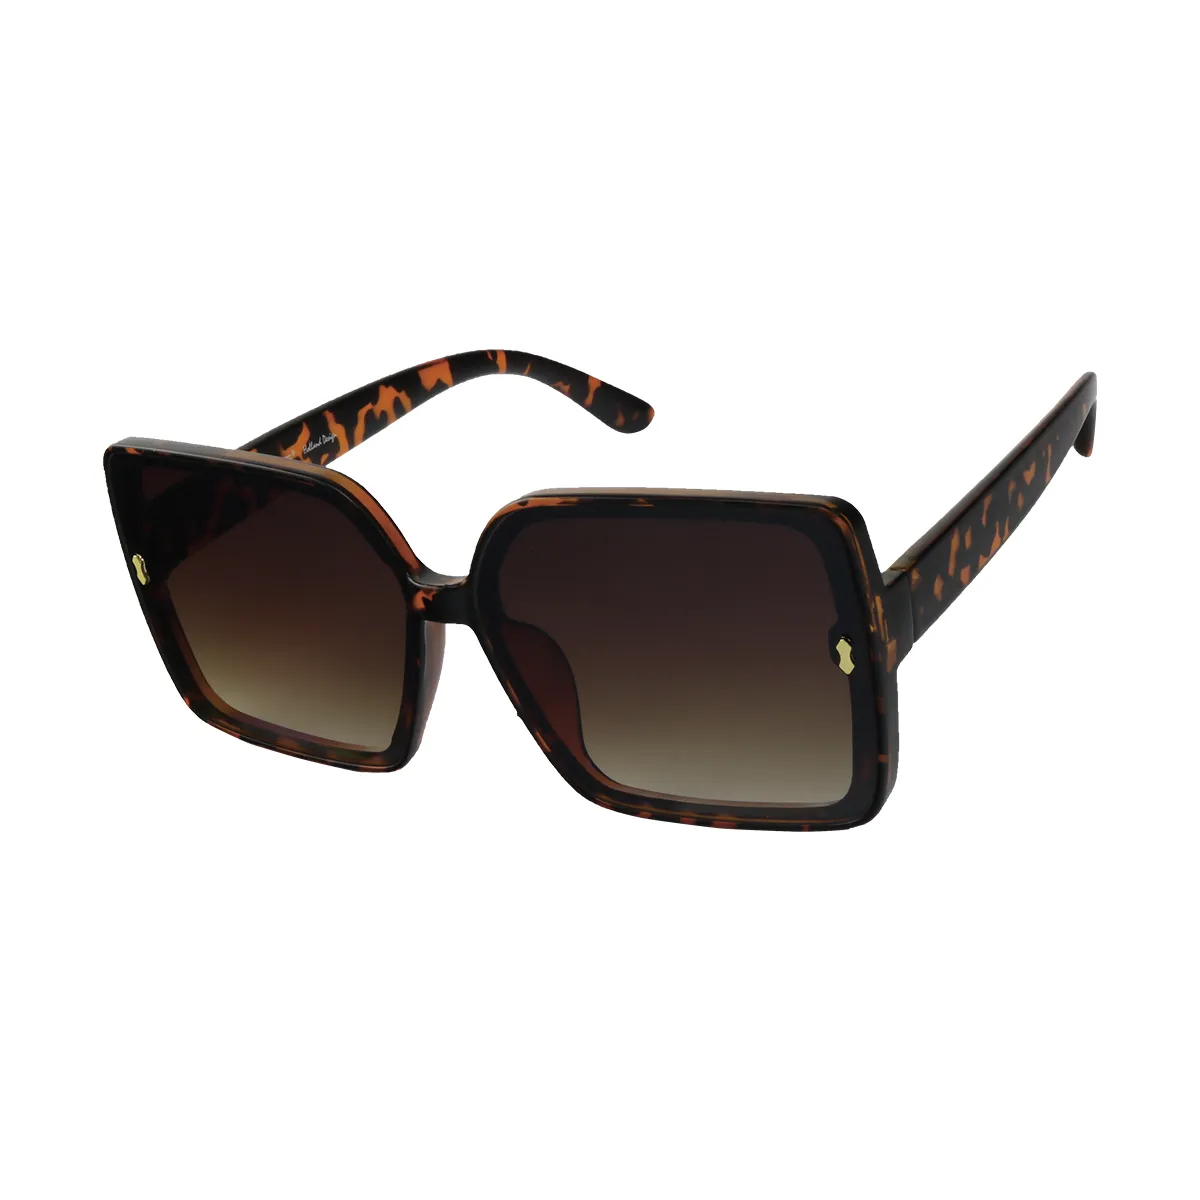 Marias - Square Tortoiseshell Sunglasses for Women